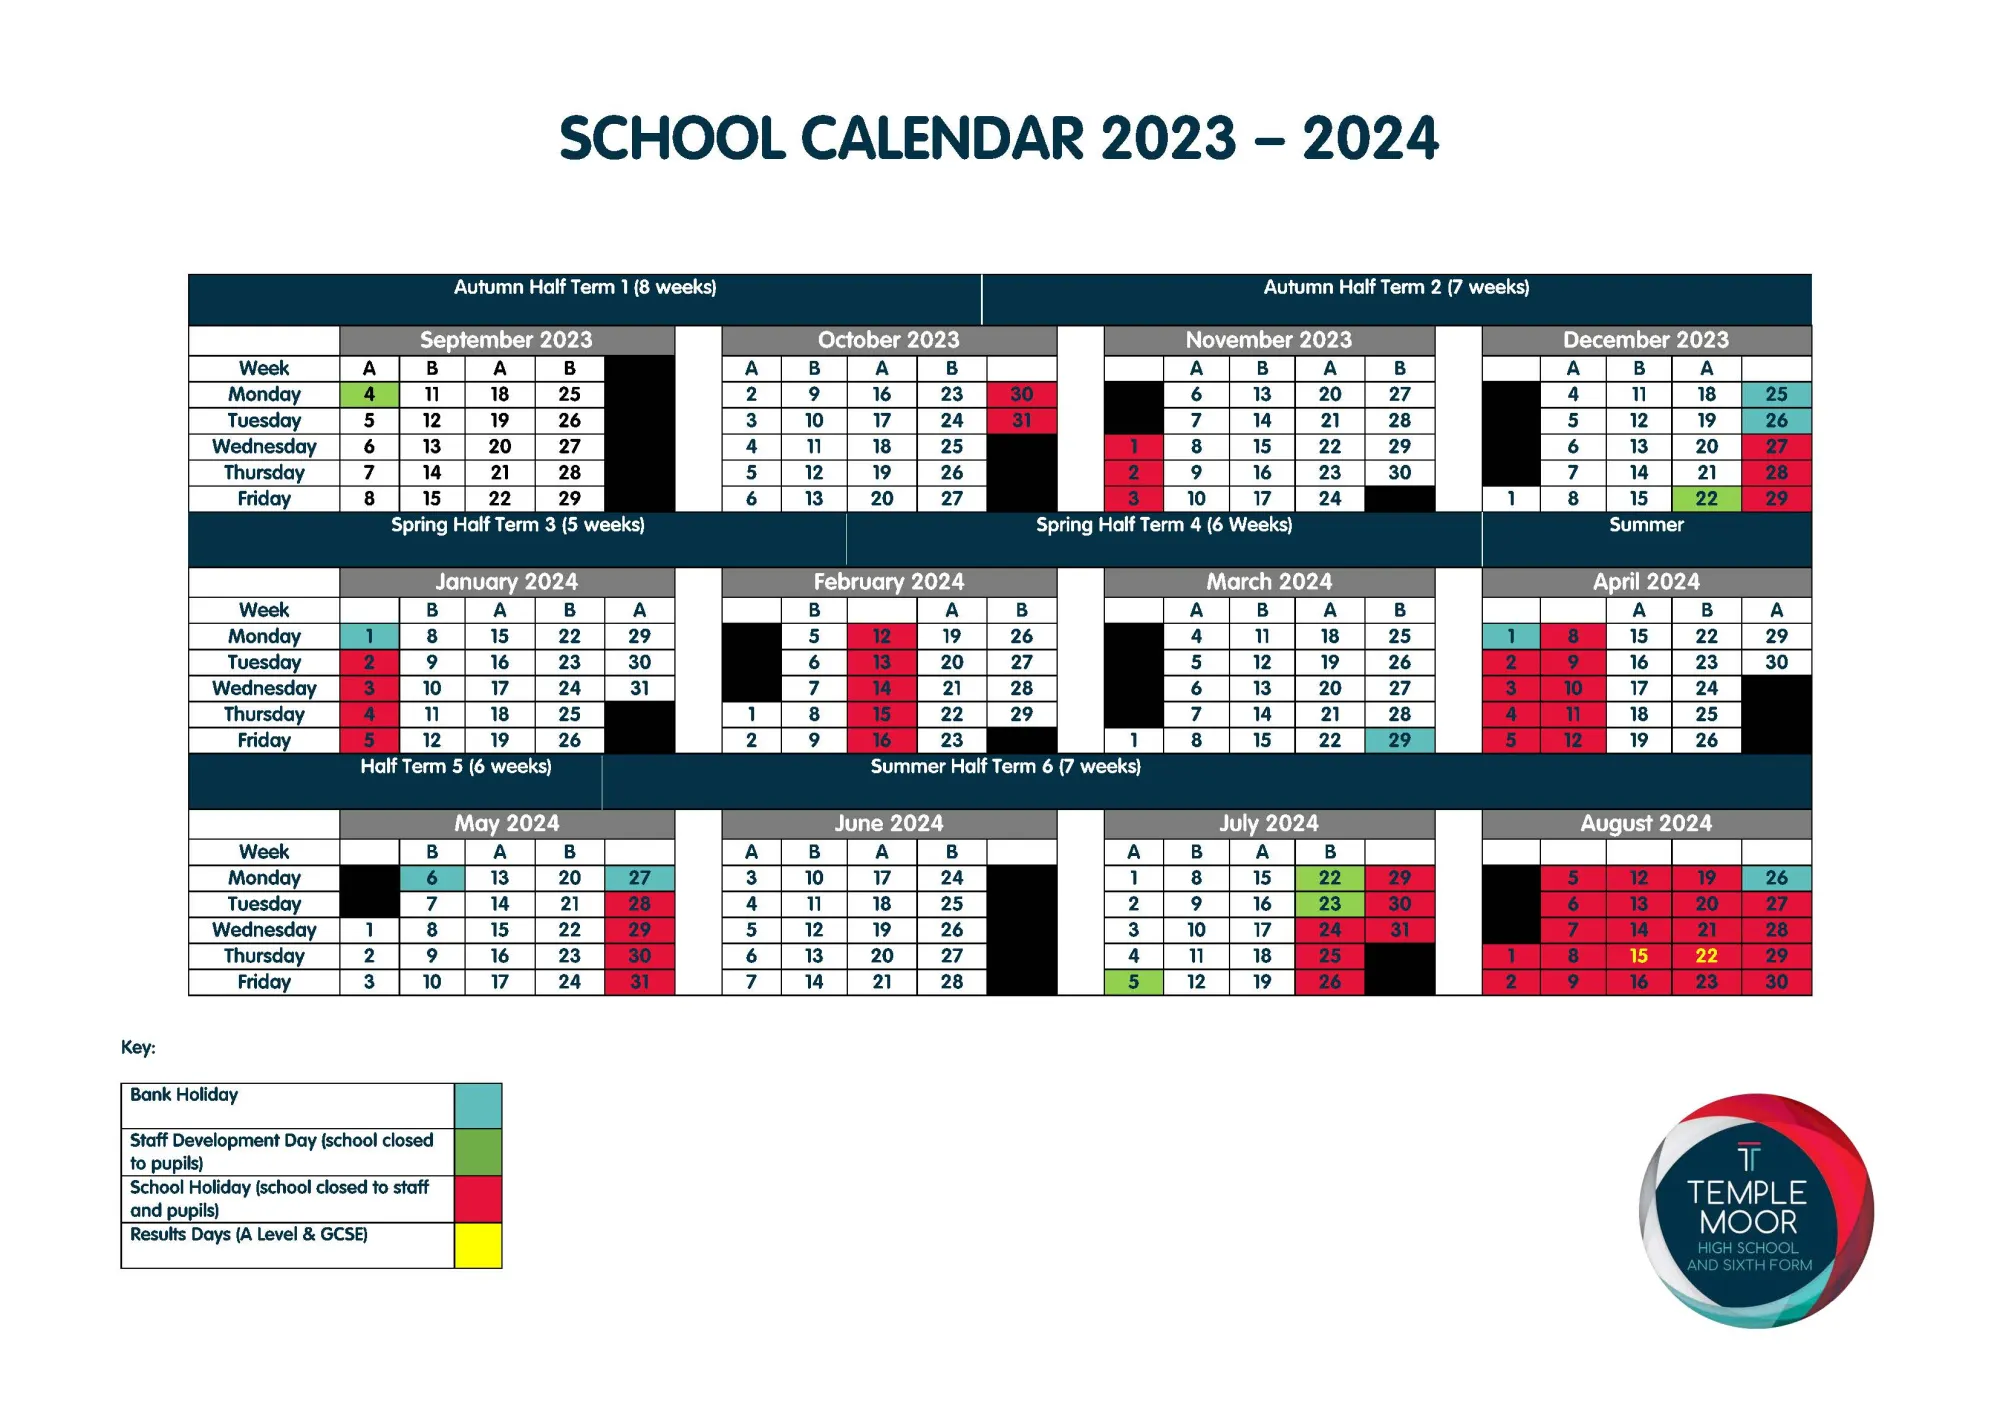 Parent Downloadable School Calendar Oct 2023.docx